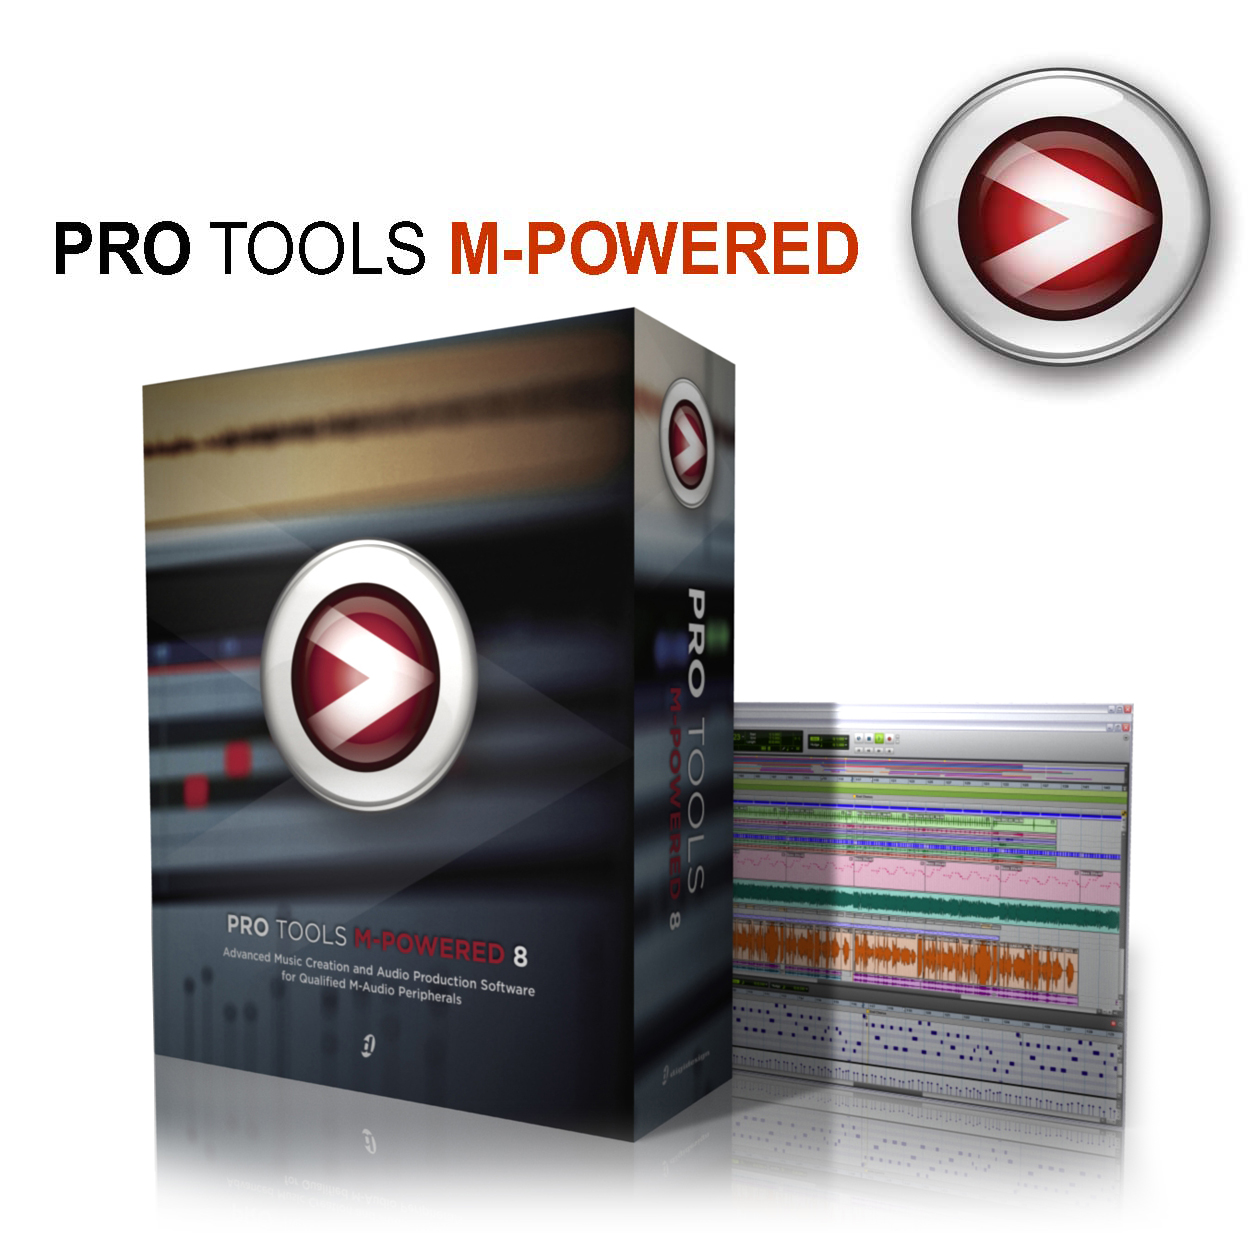 Pro tools m powered 8 keygen crack - free.